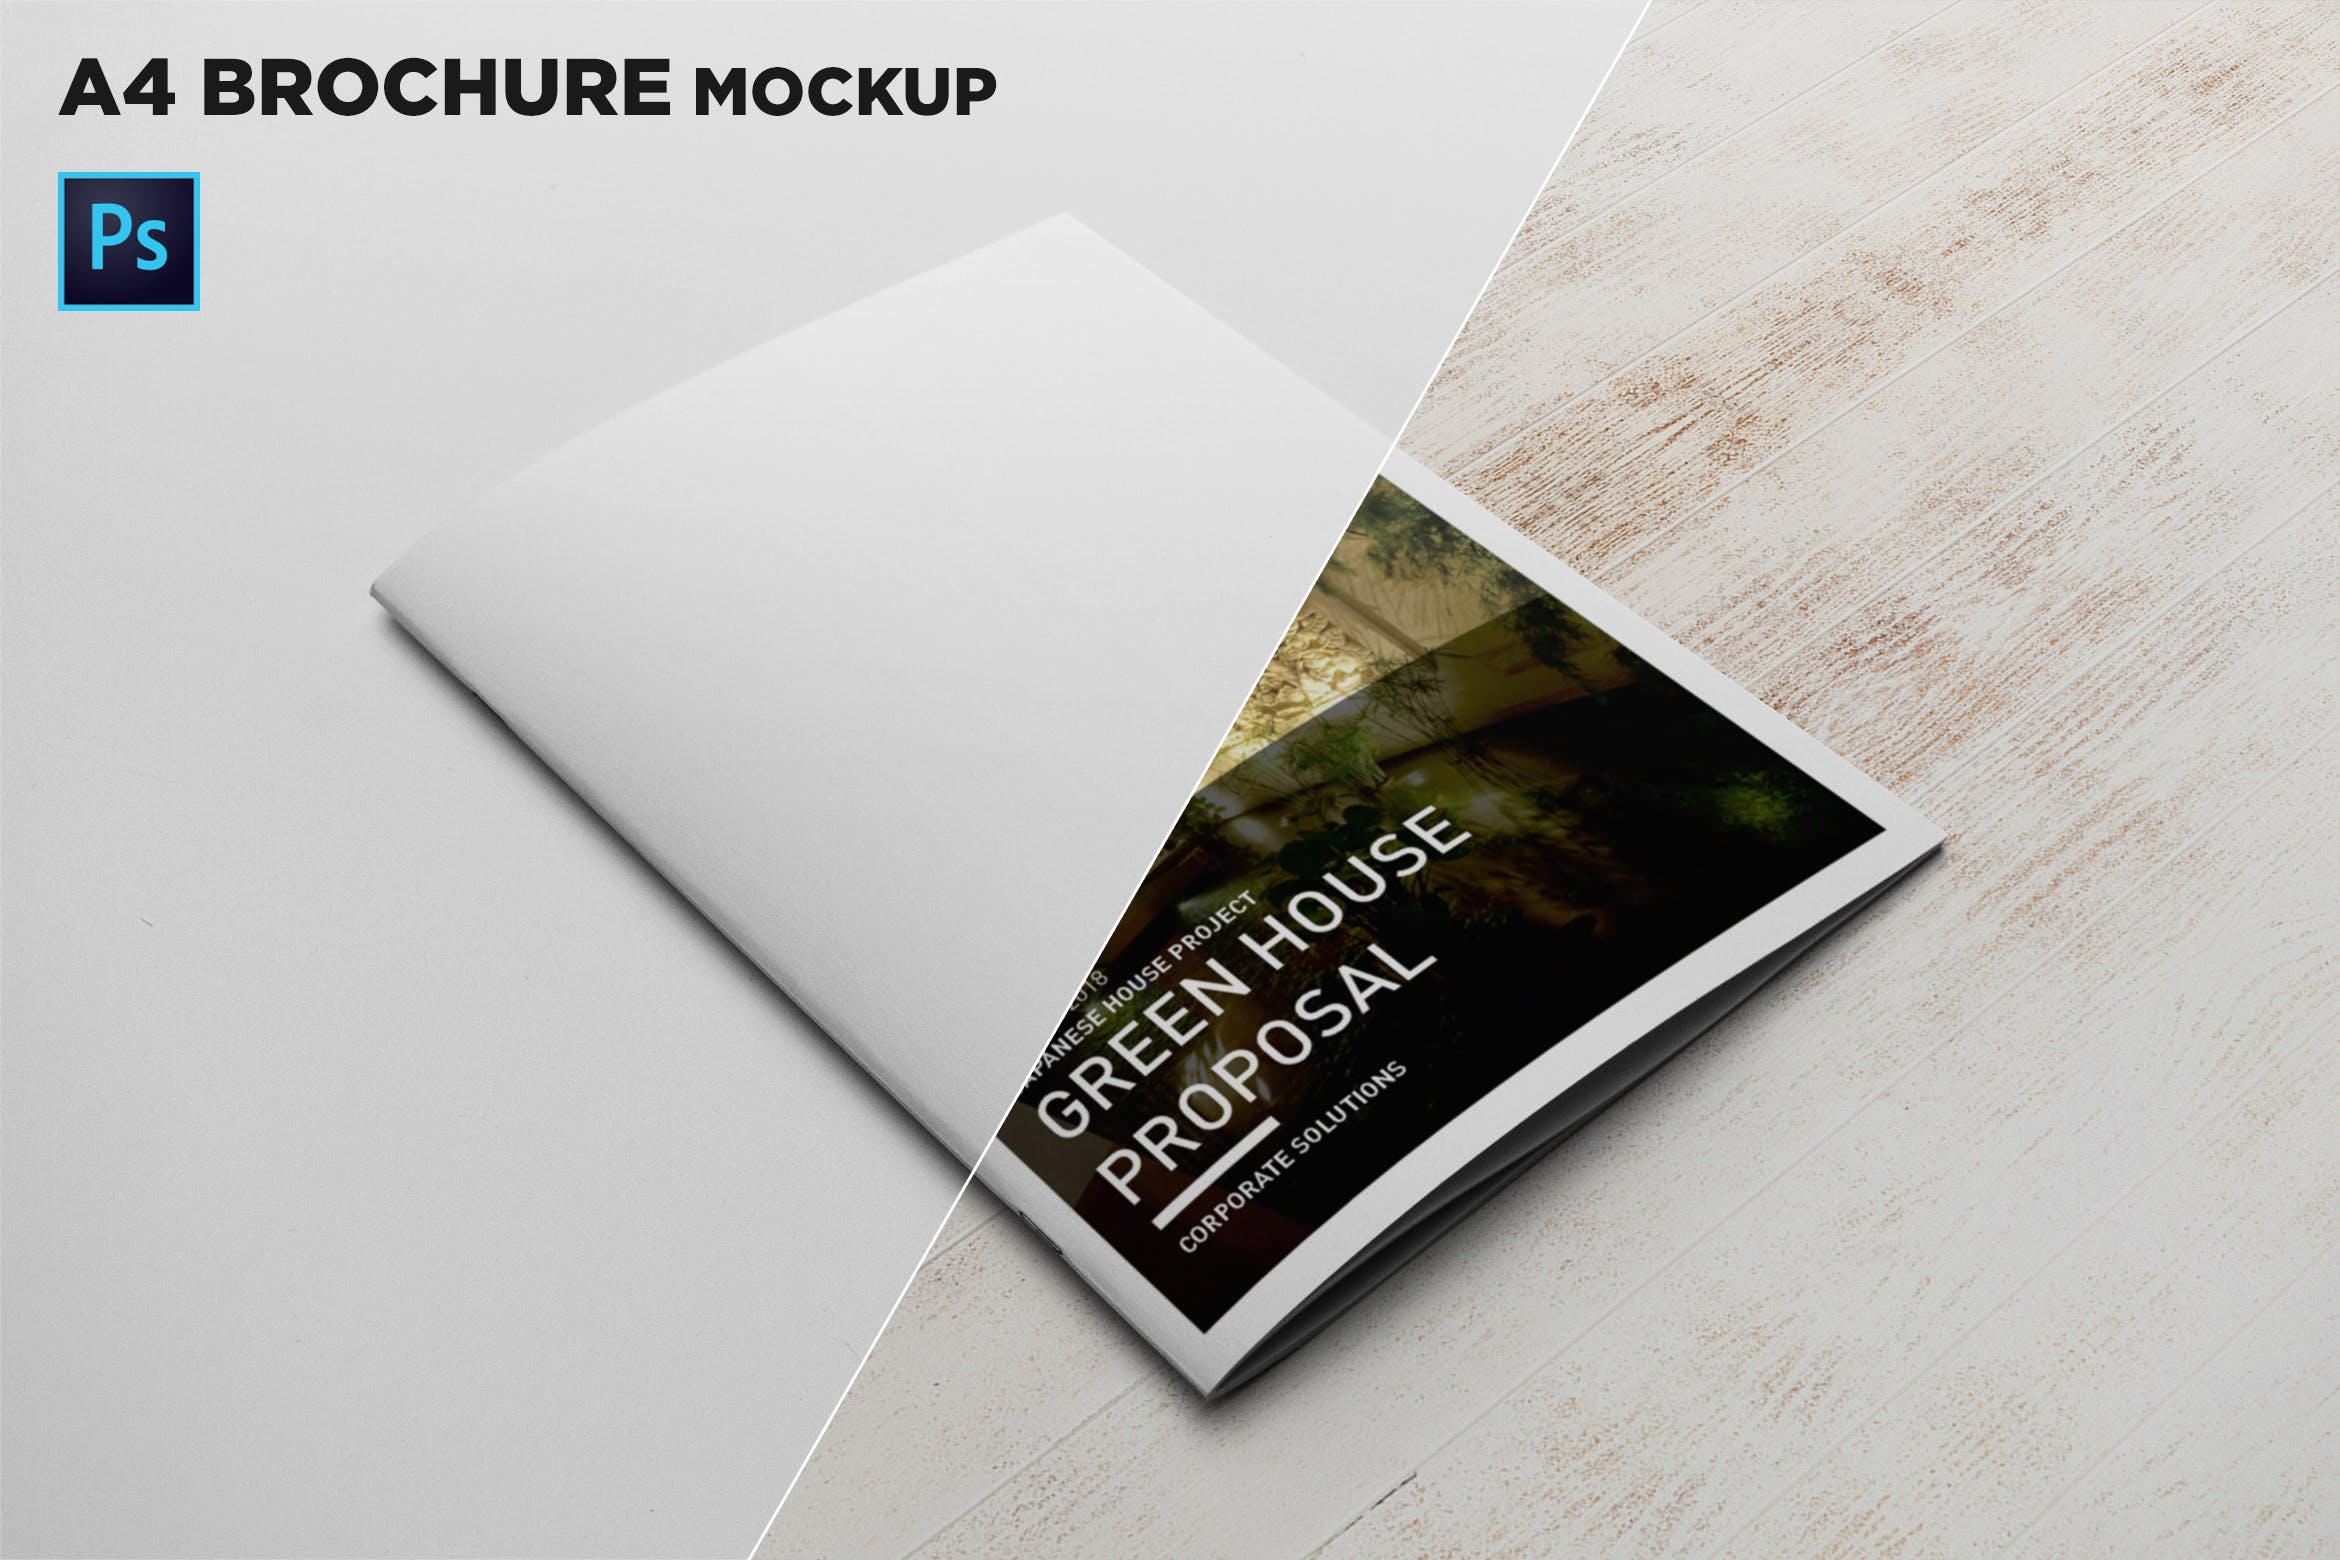 A4宣传小册子/企业画册封面设计45度角视图样机第一素材精选 A4 Brochure Cover Mockup插图